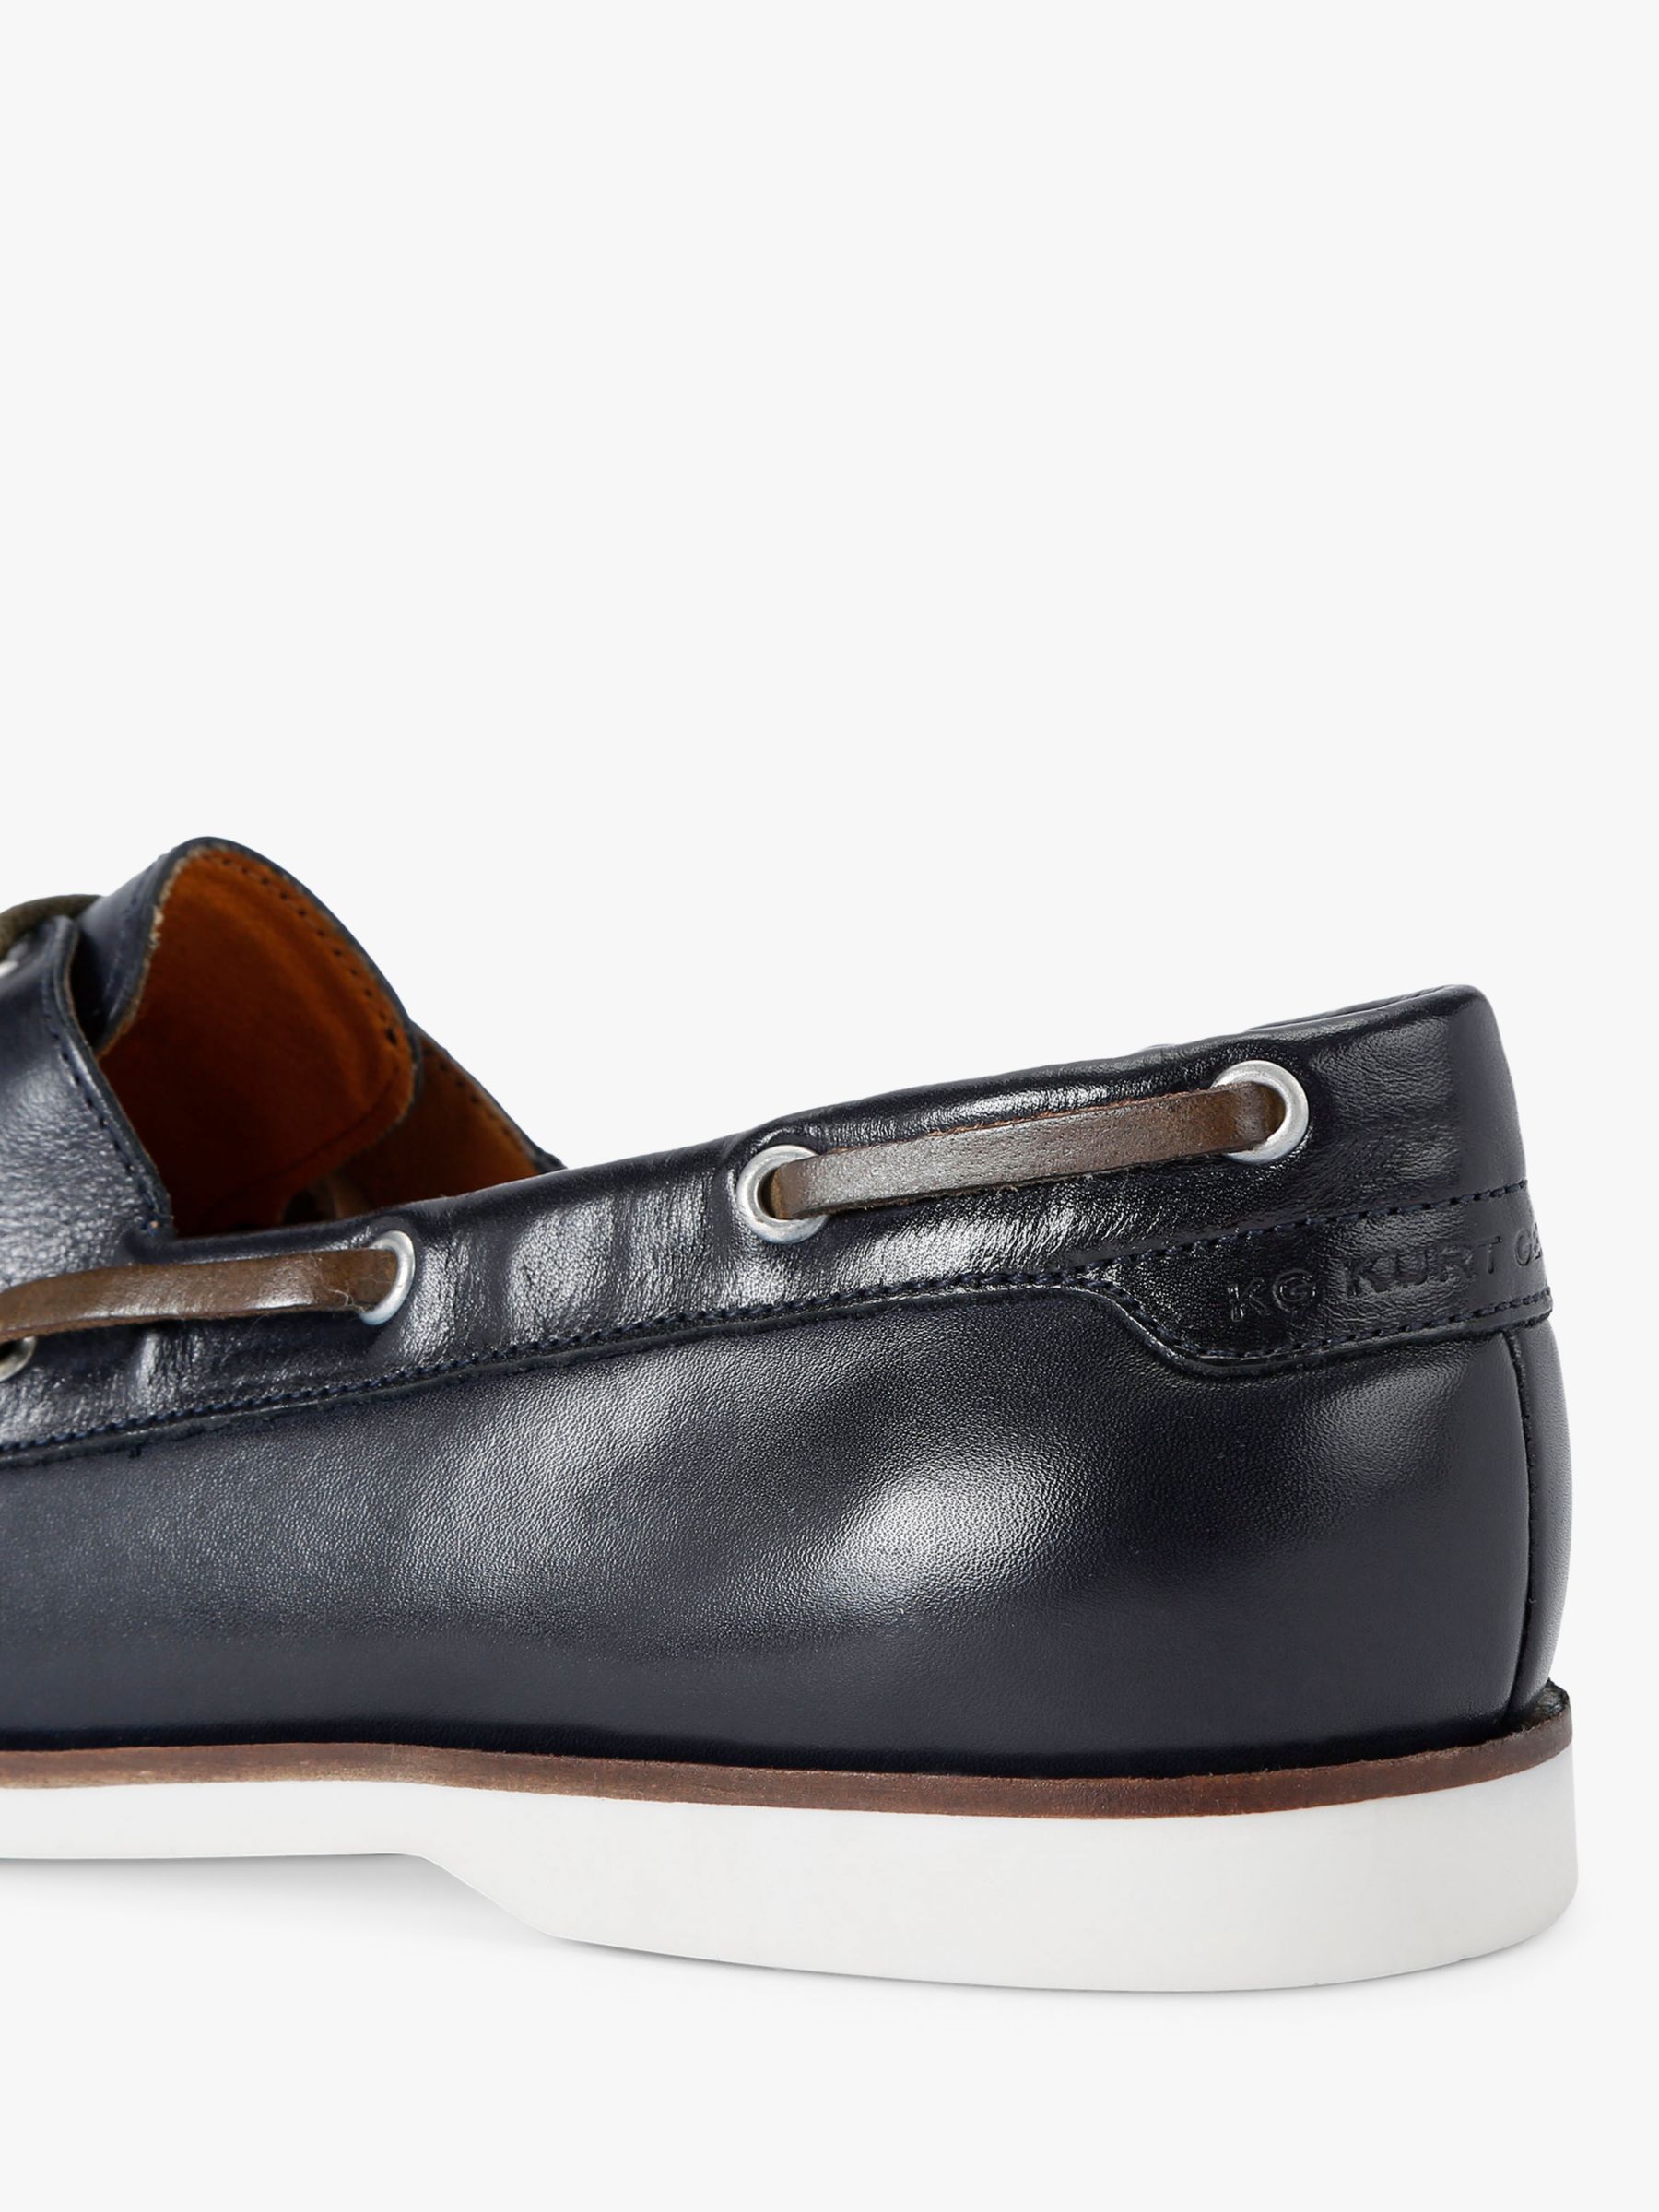 KG Kurt Geiger Venice Leather Boat Shoes, Navy, 6